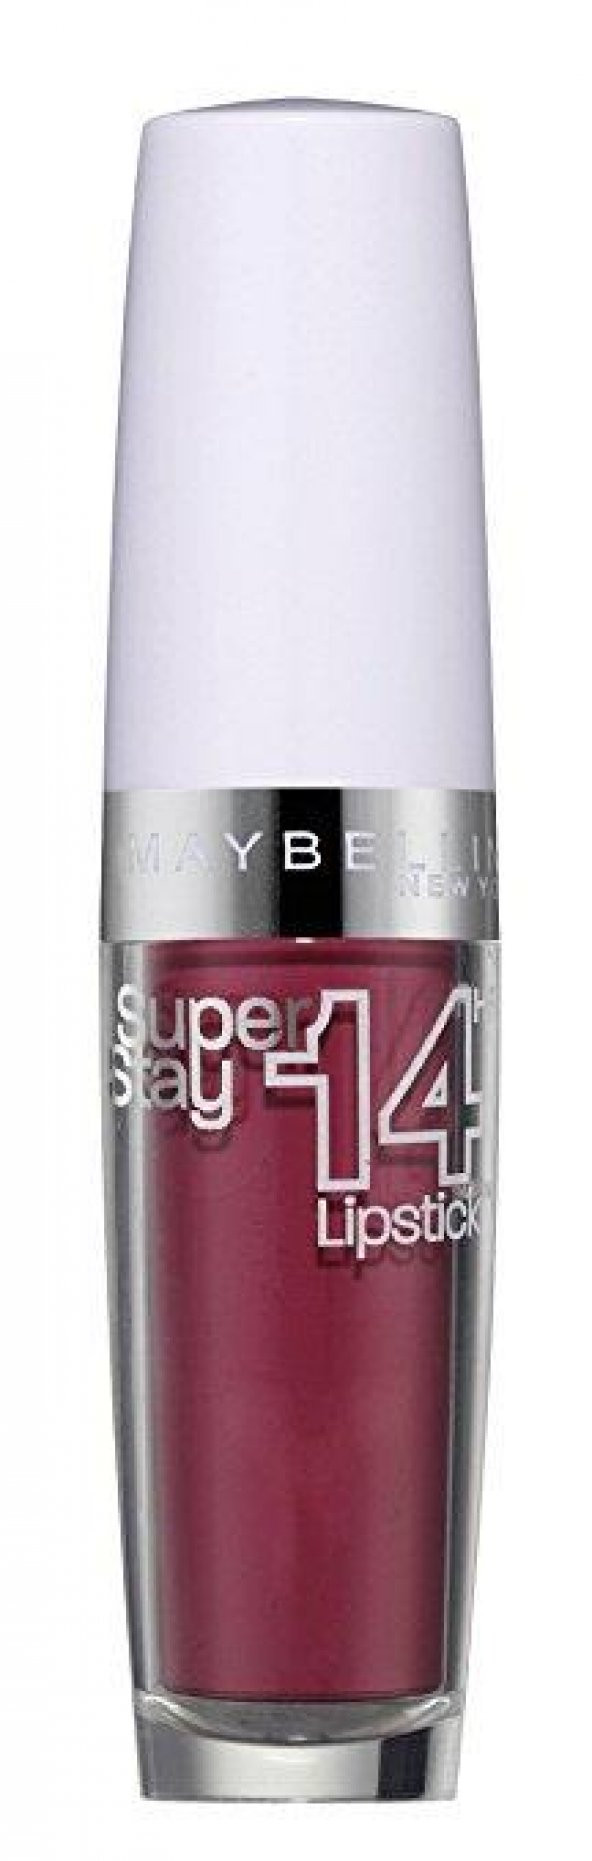 Maybelline Super Stay 14H Lipstick 190